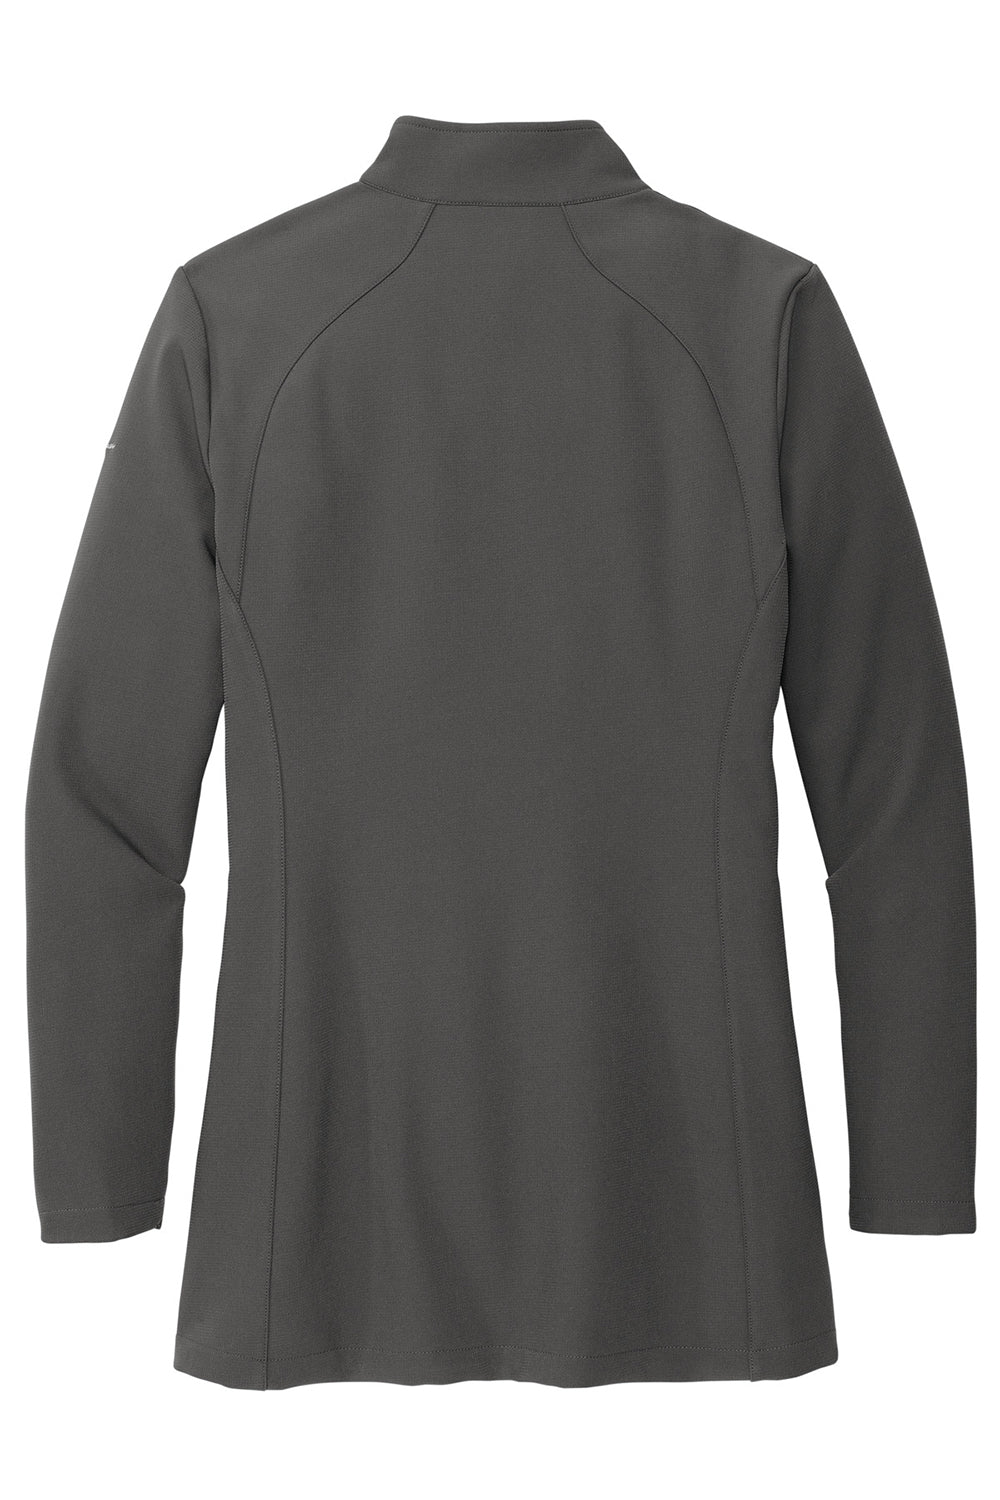 Eddie Bauer EB545 Womens Stretch Water Resistant Full Zip Soft Shell Jacket Iron Gate Grey Flat Back